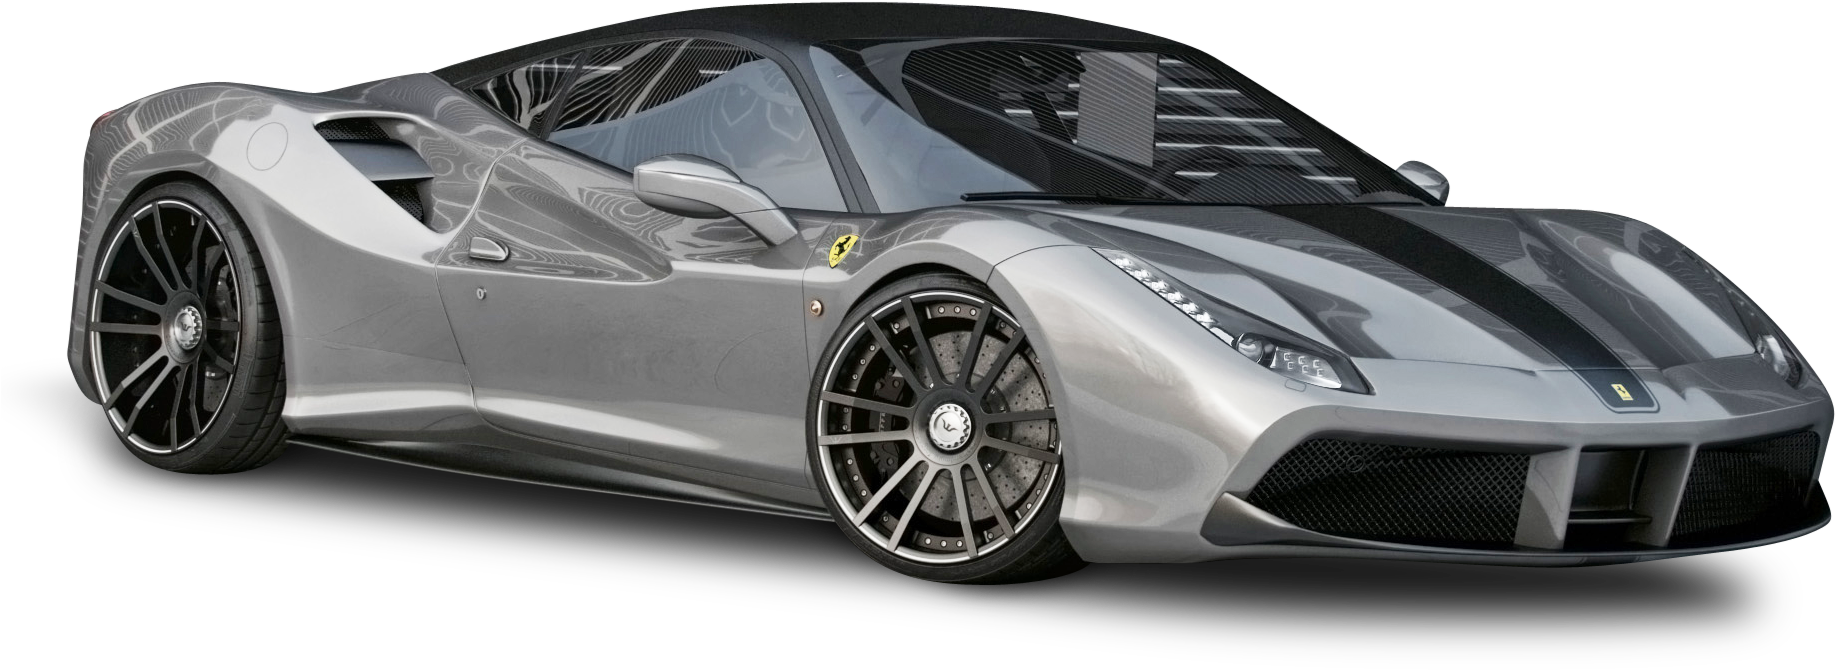 Silver Ferrari Sports Car PNG image